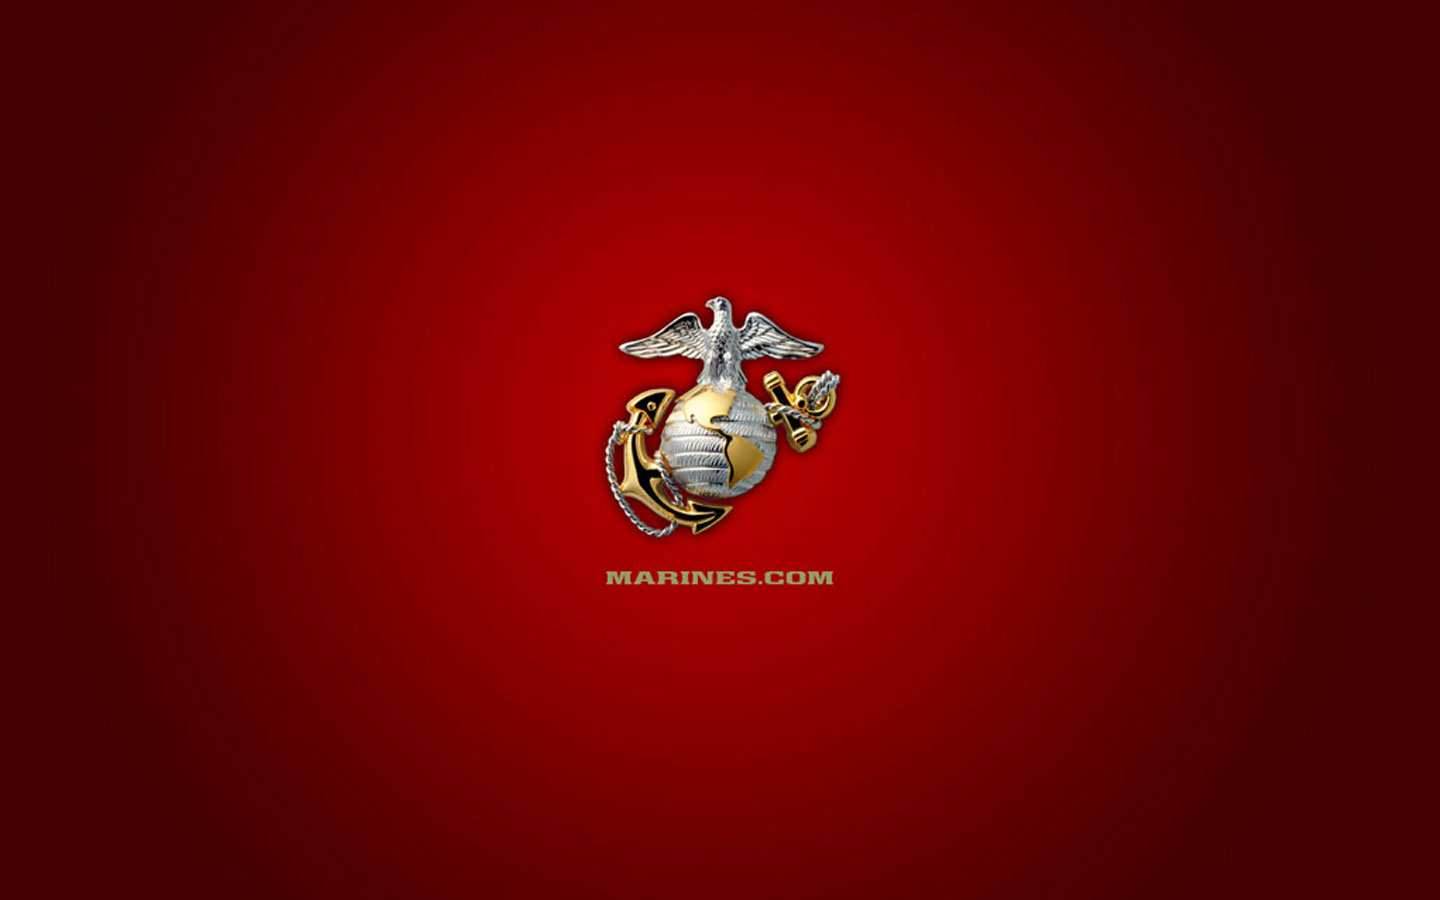 US Marine Corps wallpaper   ForWallpapercom